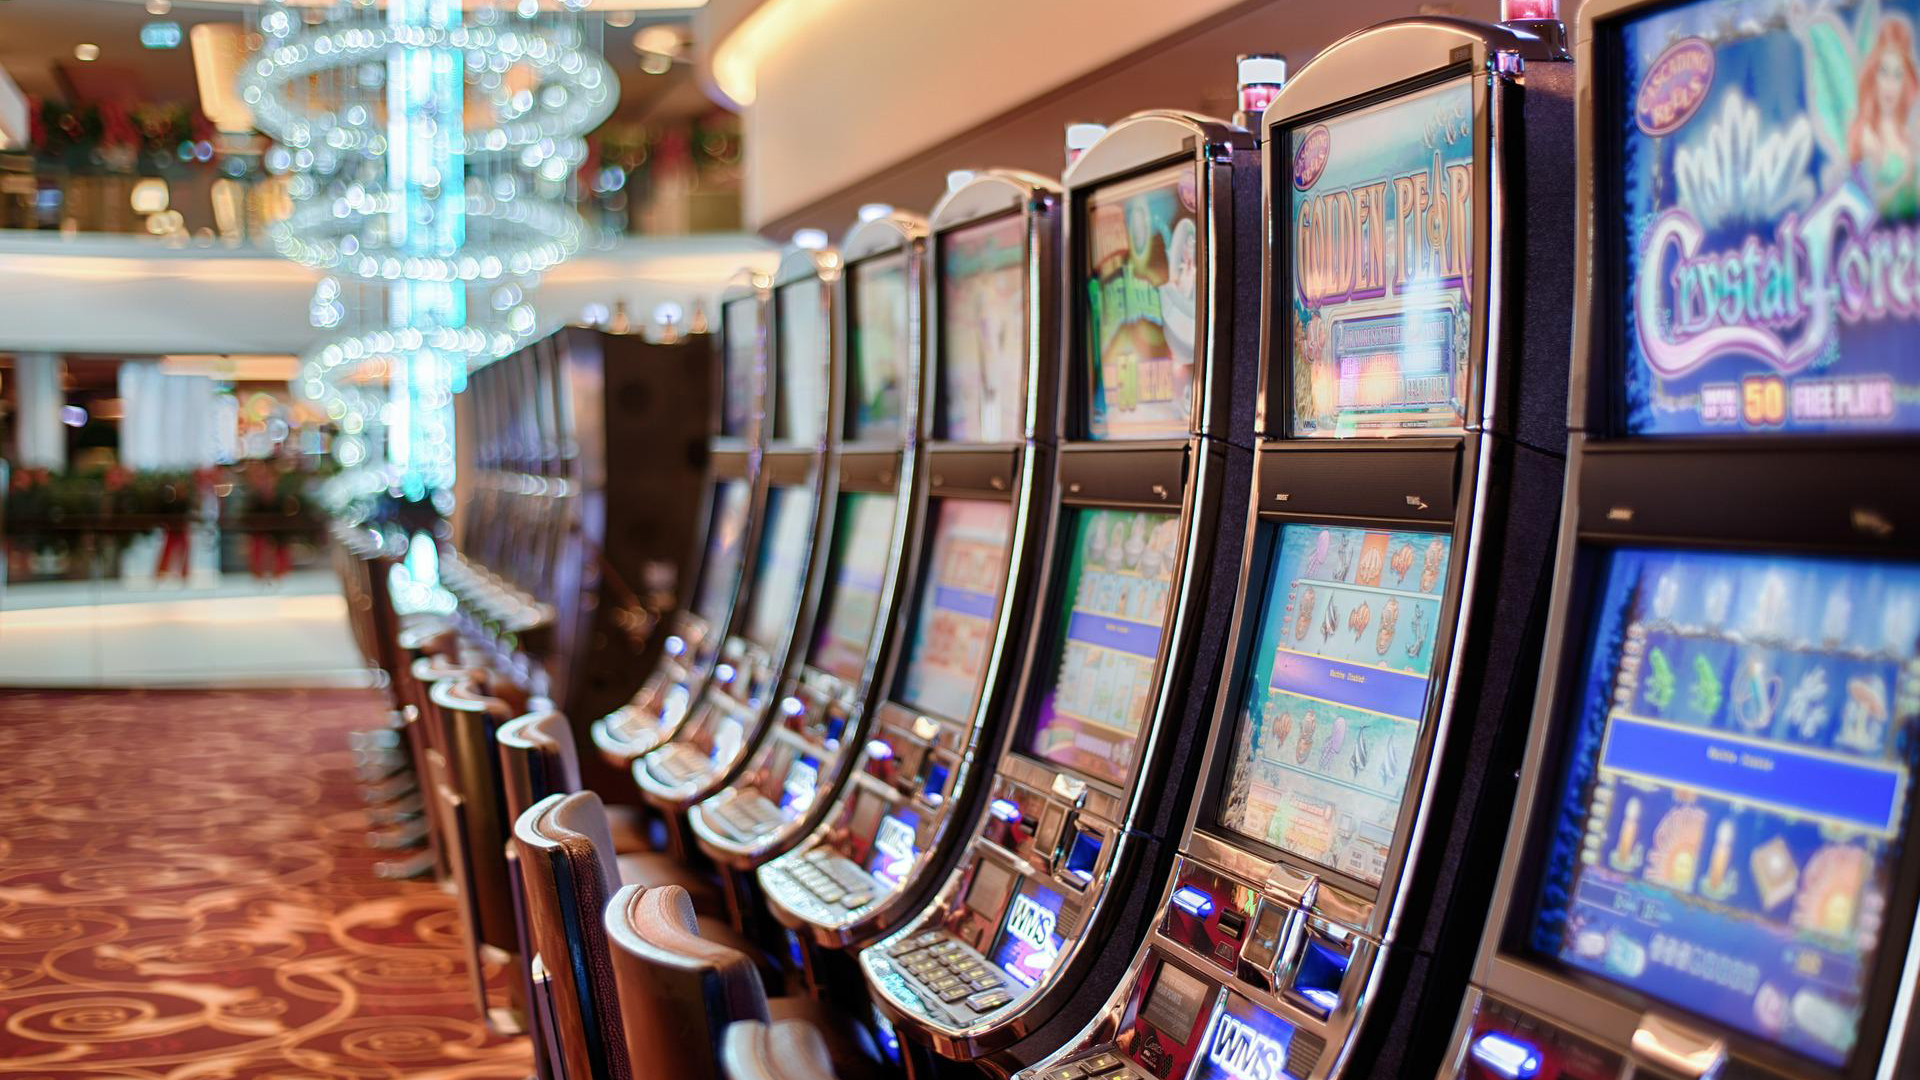 Le blog parlera de casino informations populaires.